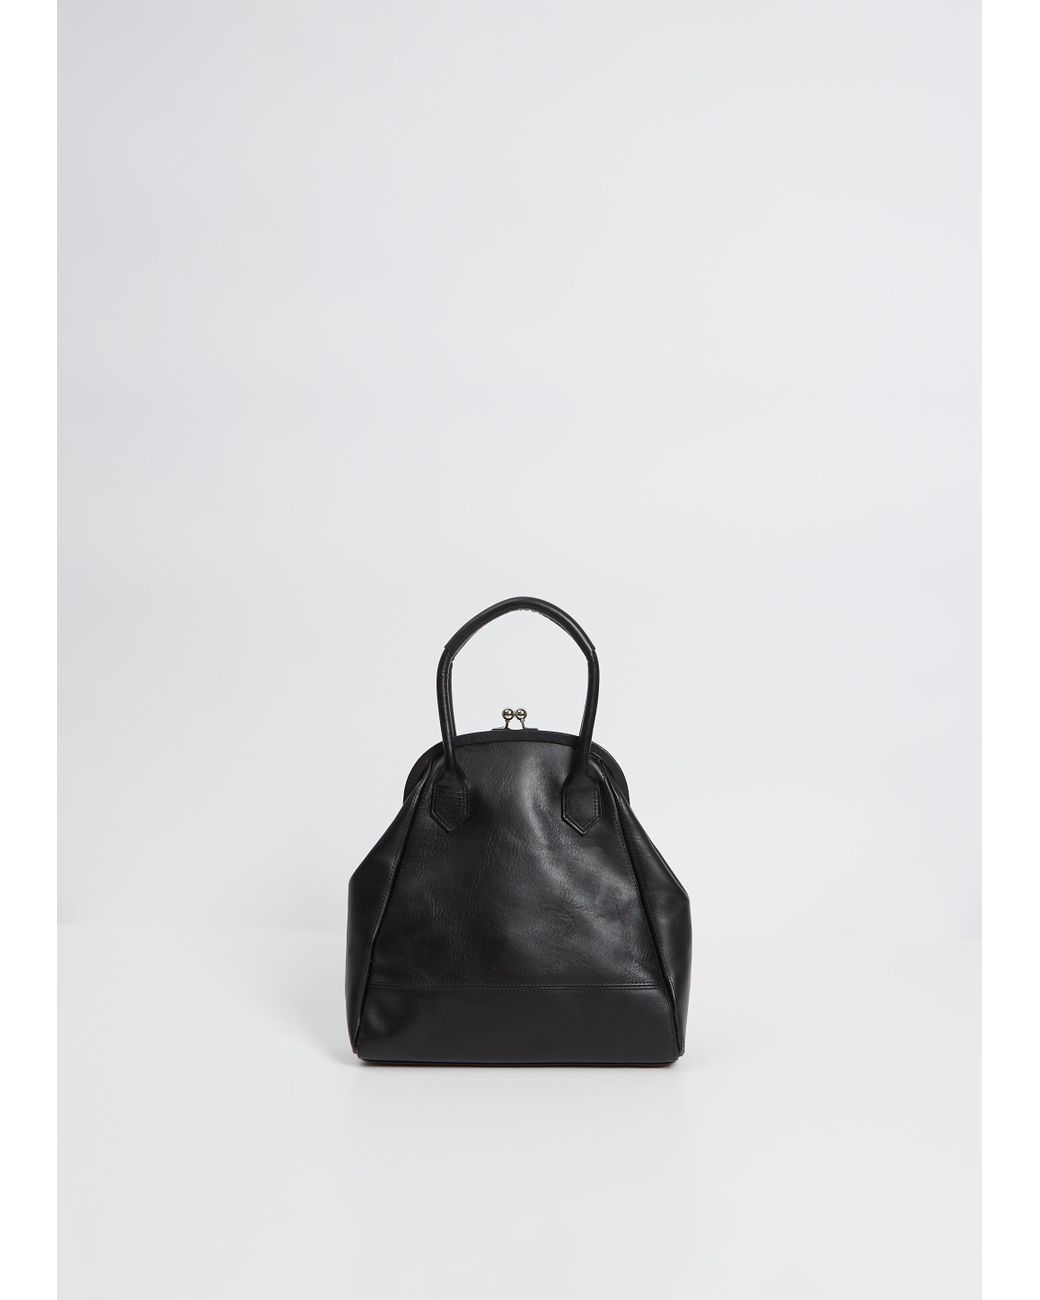 Y's Yohji Yamamoto Clasp Bag in Black | Lyst